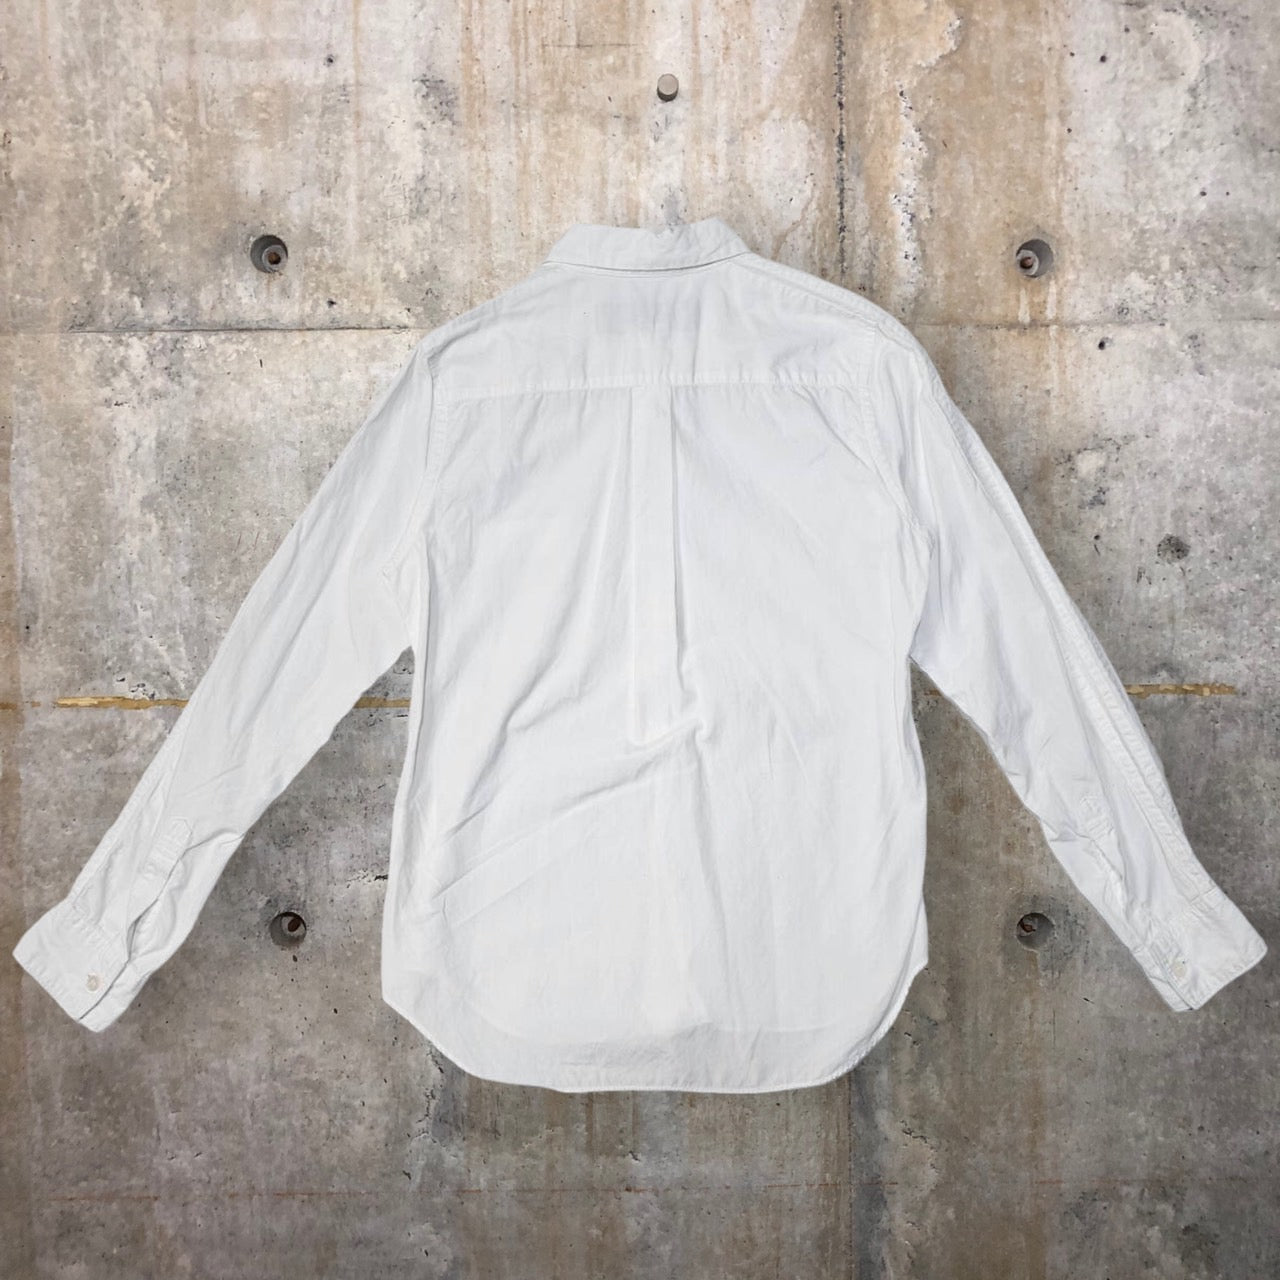 COMME des GARCONS(コムデギャルソン) 02's aoyama limited edition cotton long sleeve shirt/青山限定コットン長袖シャツ/00s KZ-B001 SIZE XS~S程度 ホワイト AD2002(品質表示タグ印字消え)